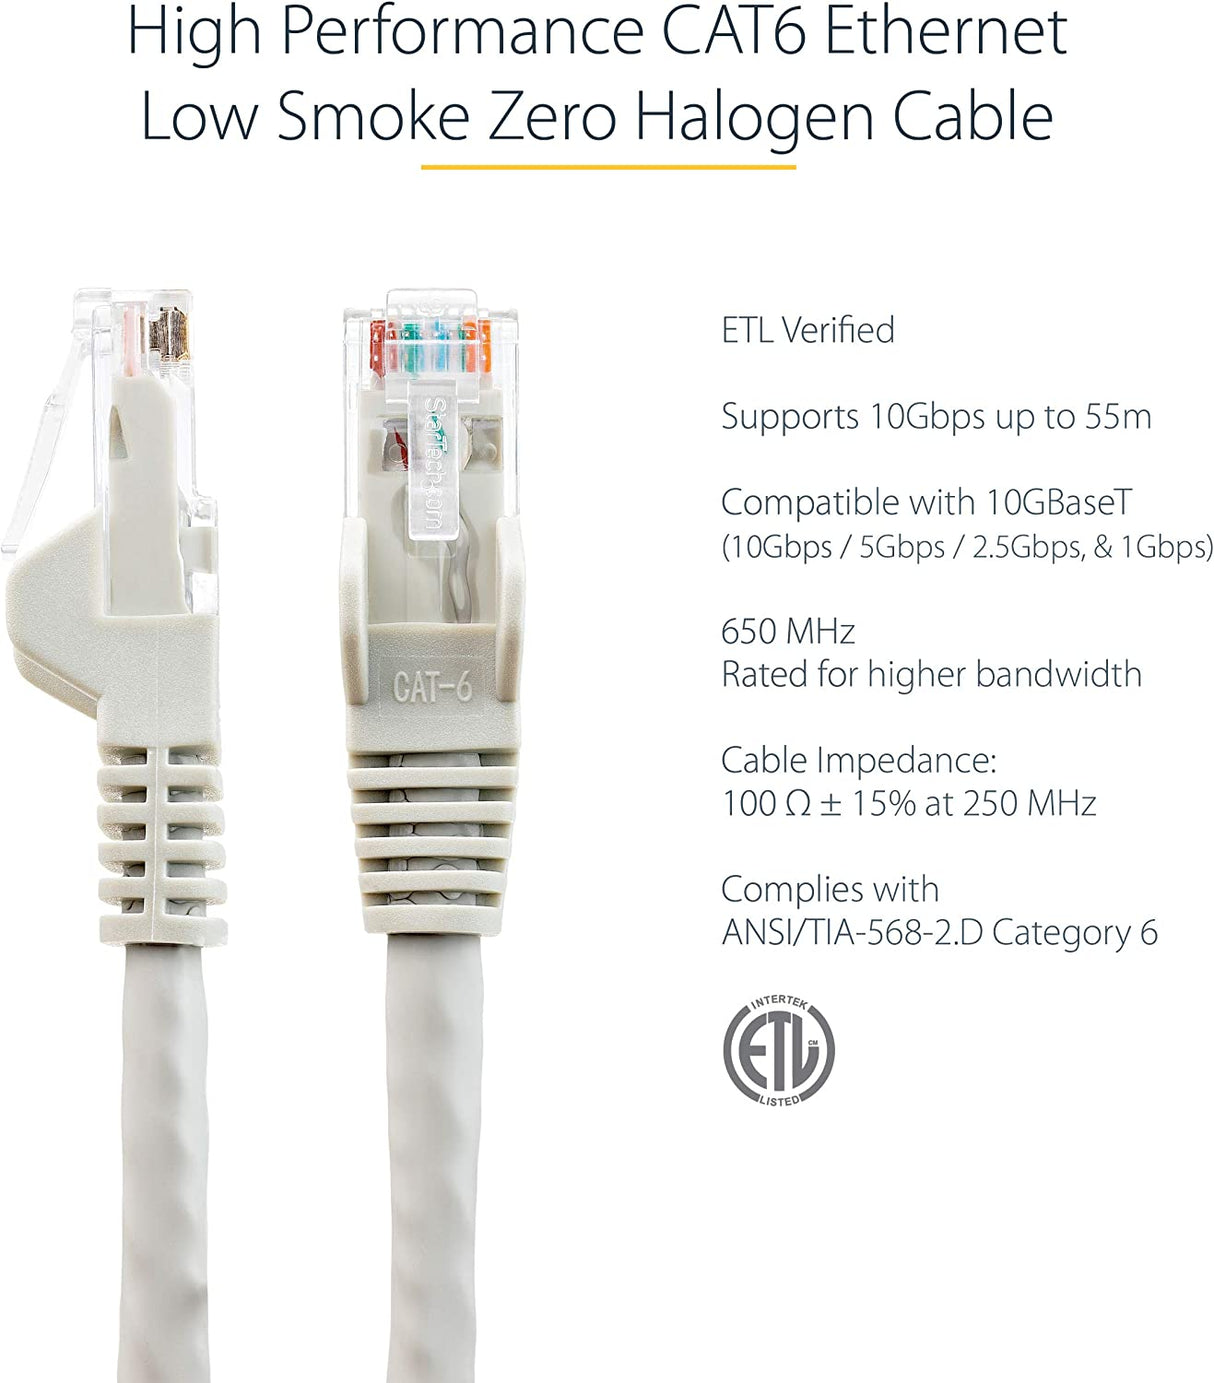 Startech 10ft (3m) CAT6 Ethernet Cable - LSZH (Low Smoke Zero Halogen) - 10 Gigabit 650MHz 100W PoE RJ45 UTP Network Patch Cord Snagless w/Strain Relief - Gray CAT 6, ETL Verified (N6LPATCH10GR) 10 ft Gray